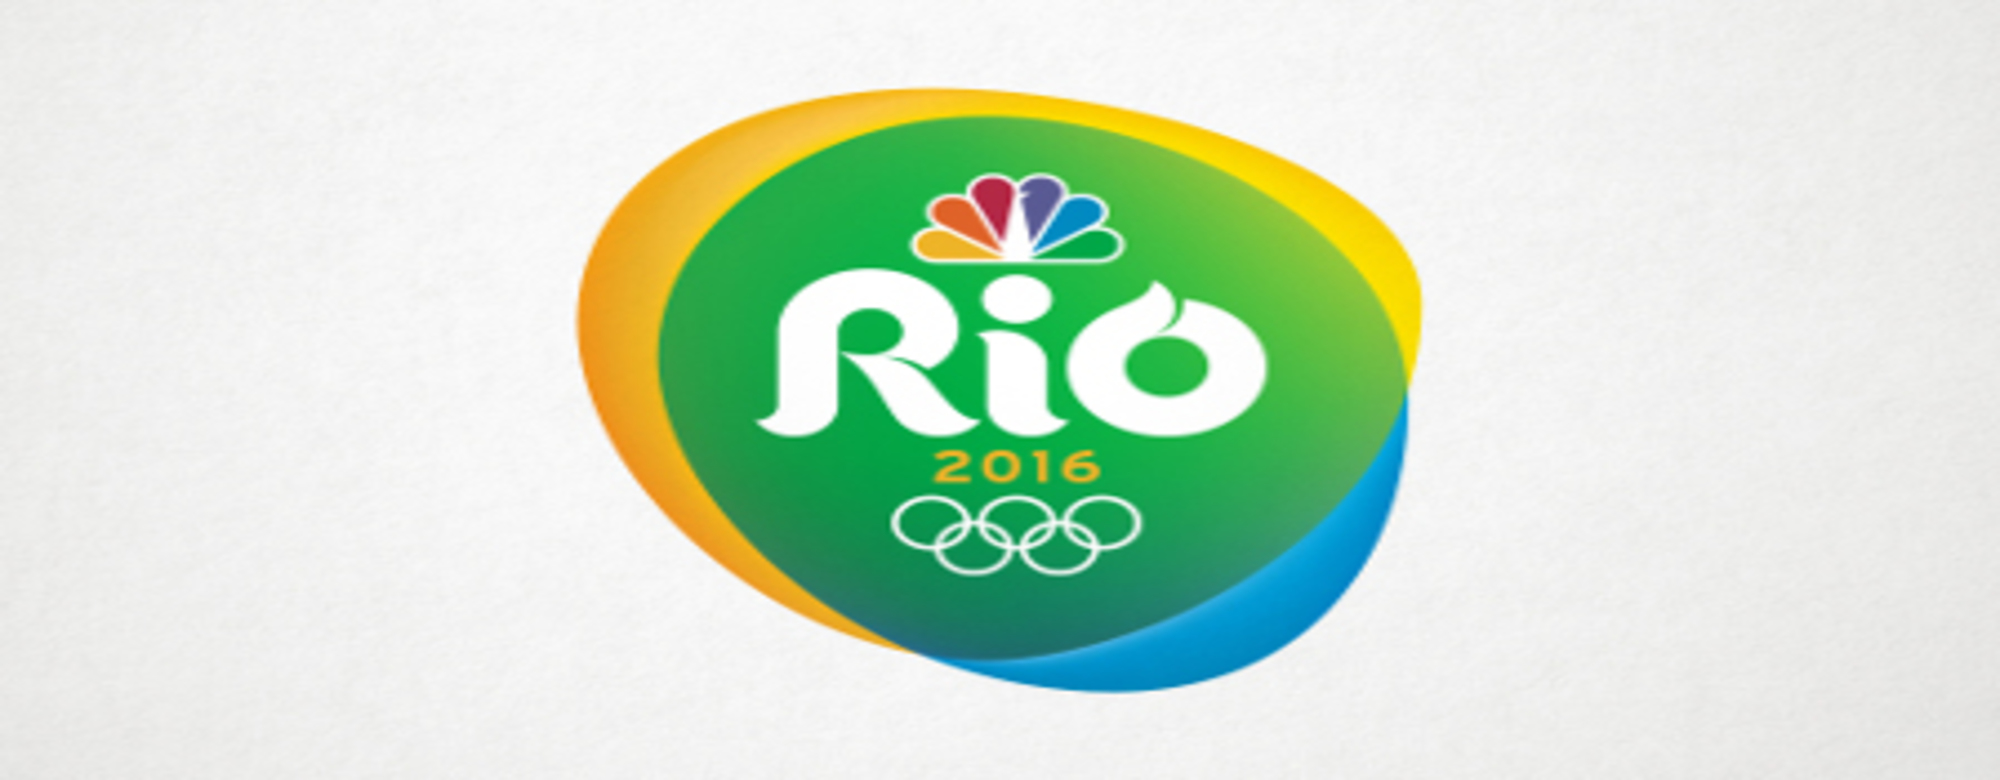 2016_Olympics_Logo_2000x780 - starpower - 2016_Olympics_Logo_2000x780